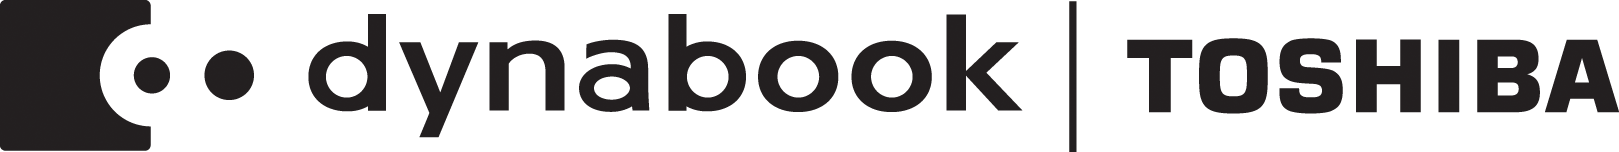 dynabook toshiba logo